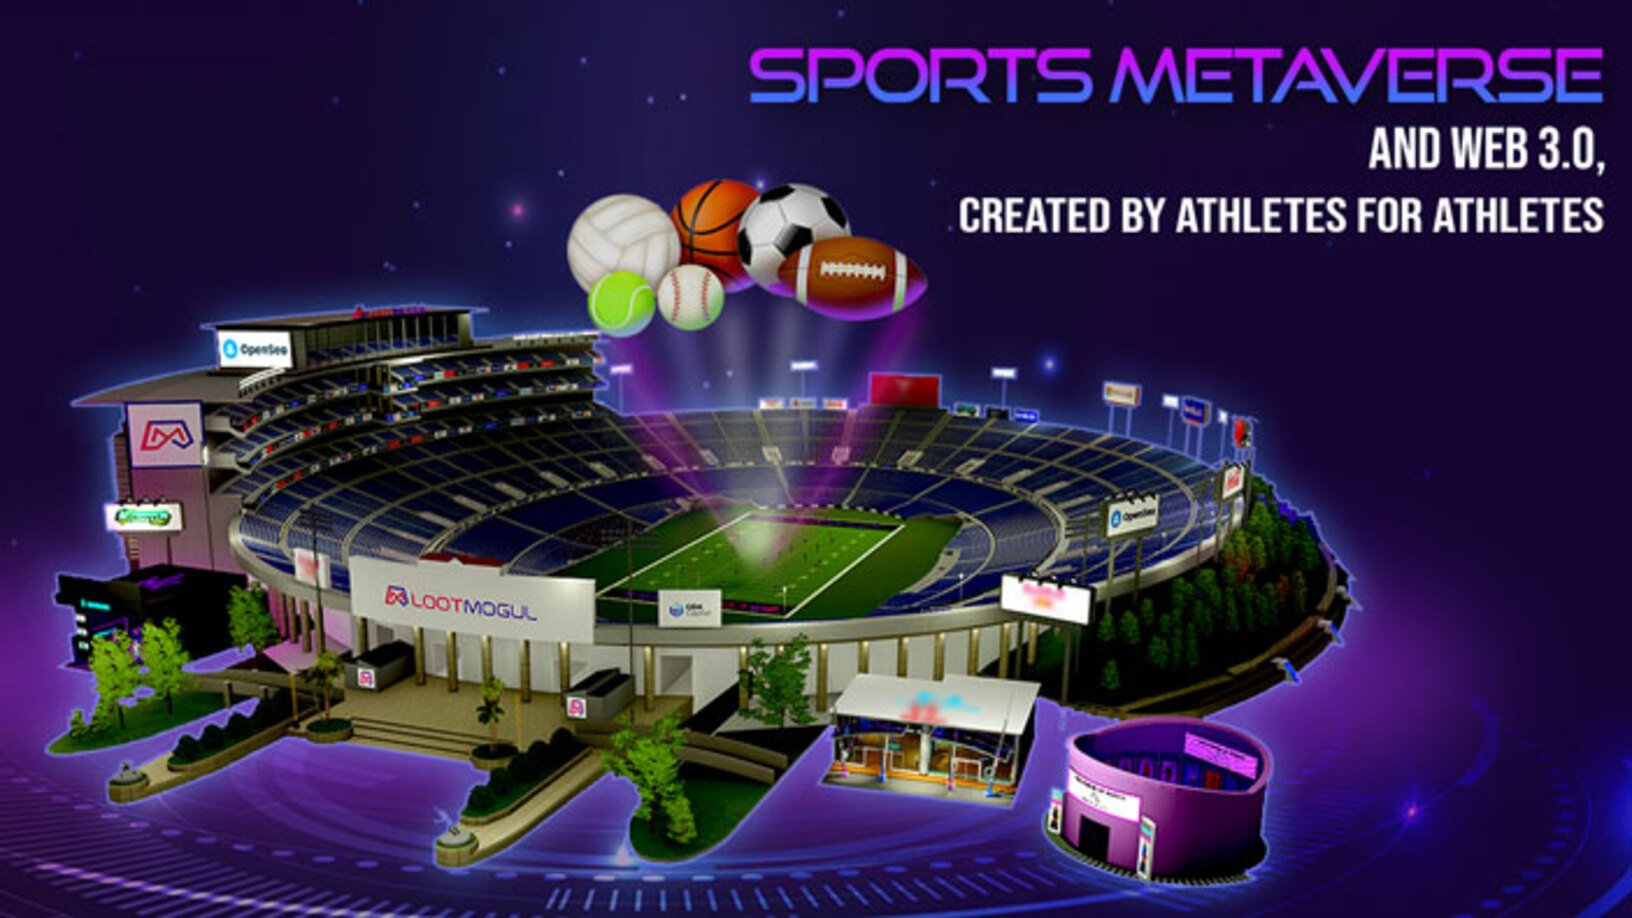 Meta Qatar Sports Stadium - LootMogul